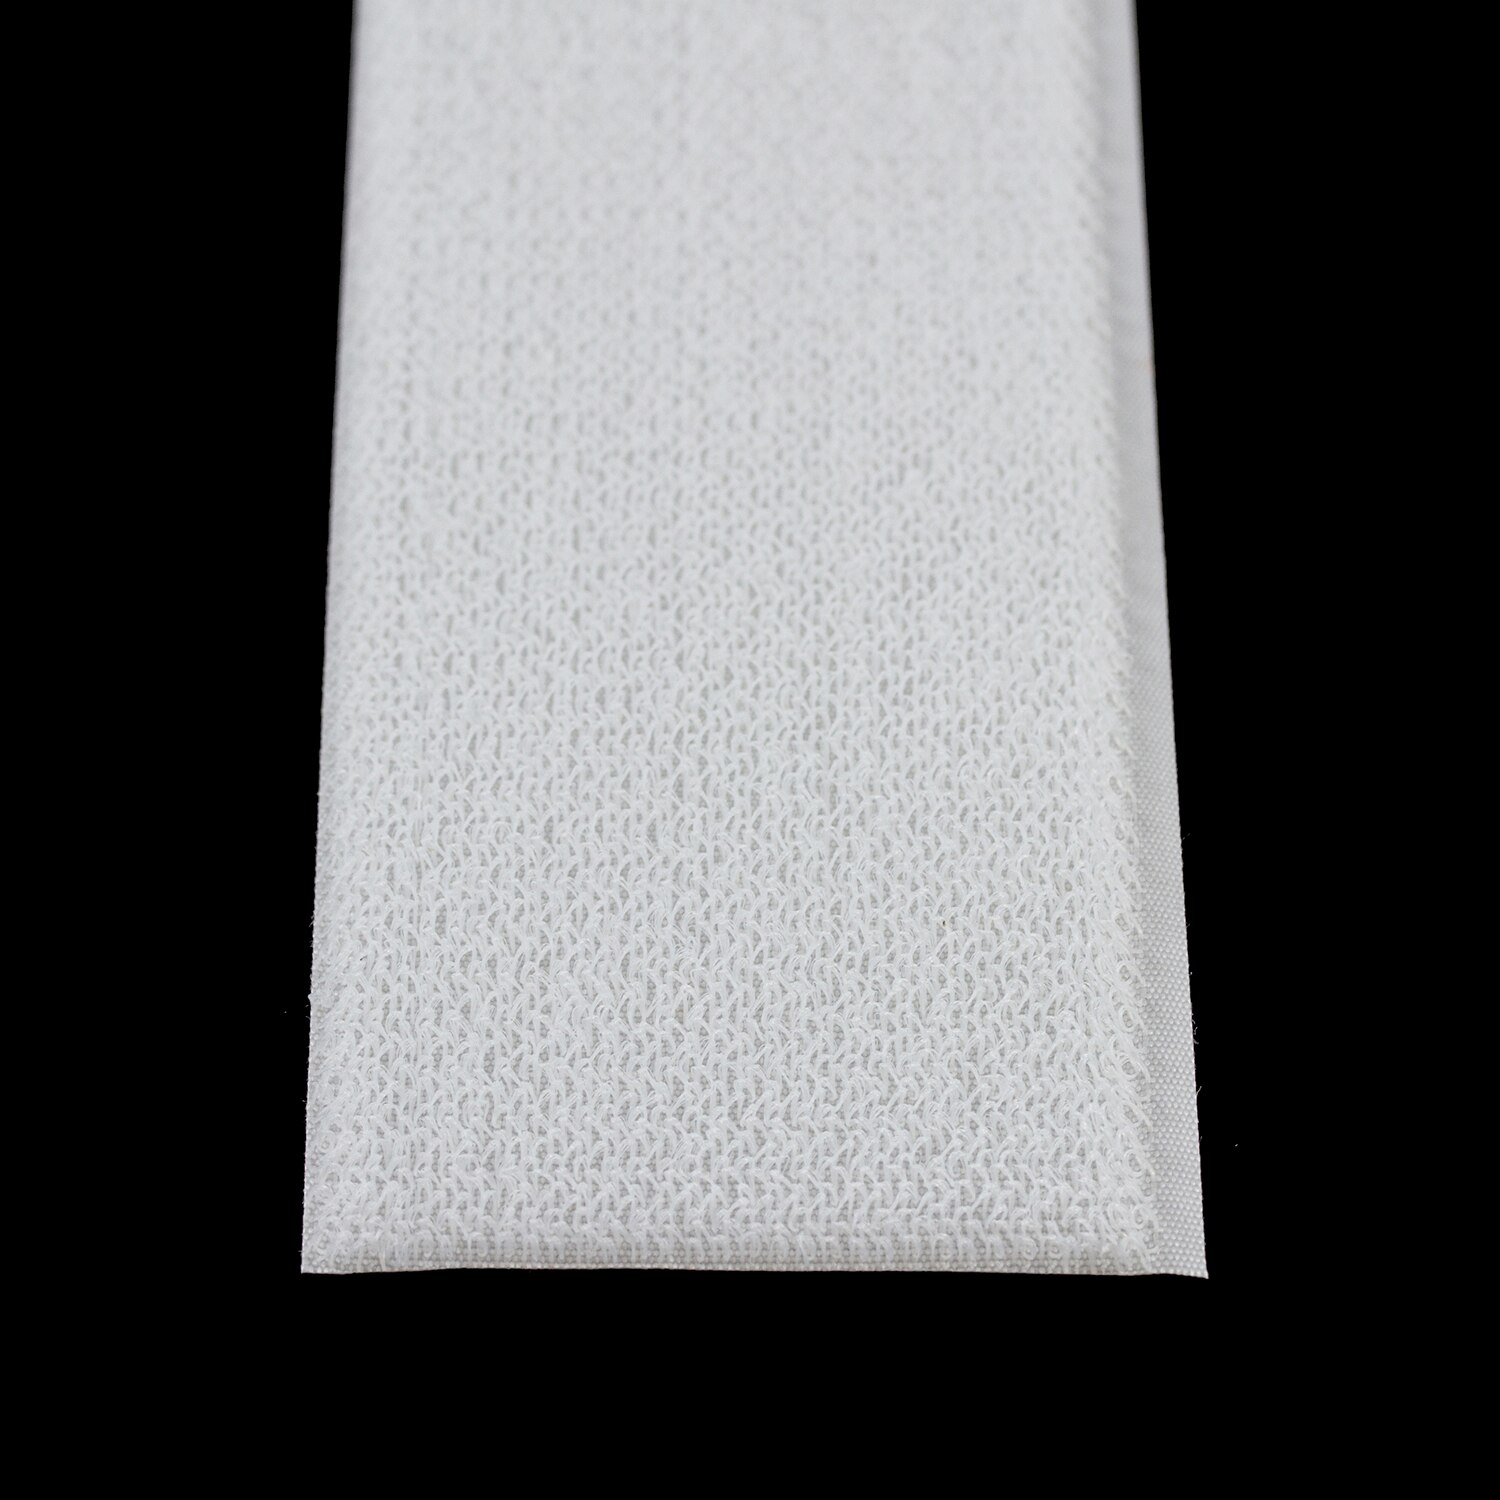 2 inch - Velcro Brand Loop 3610 Knit Nylon Sew-On - White